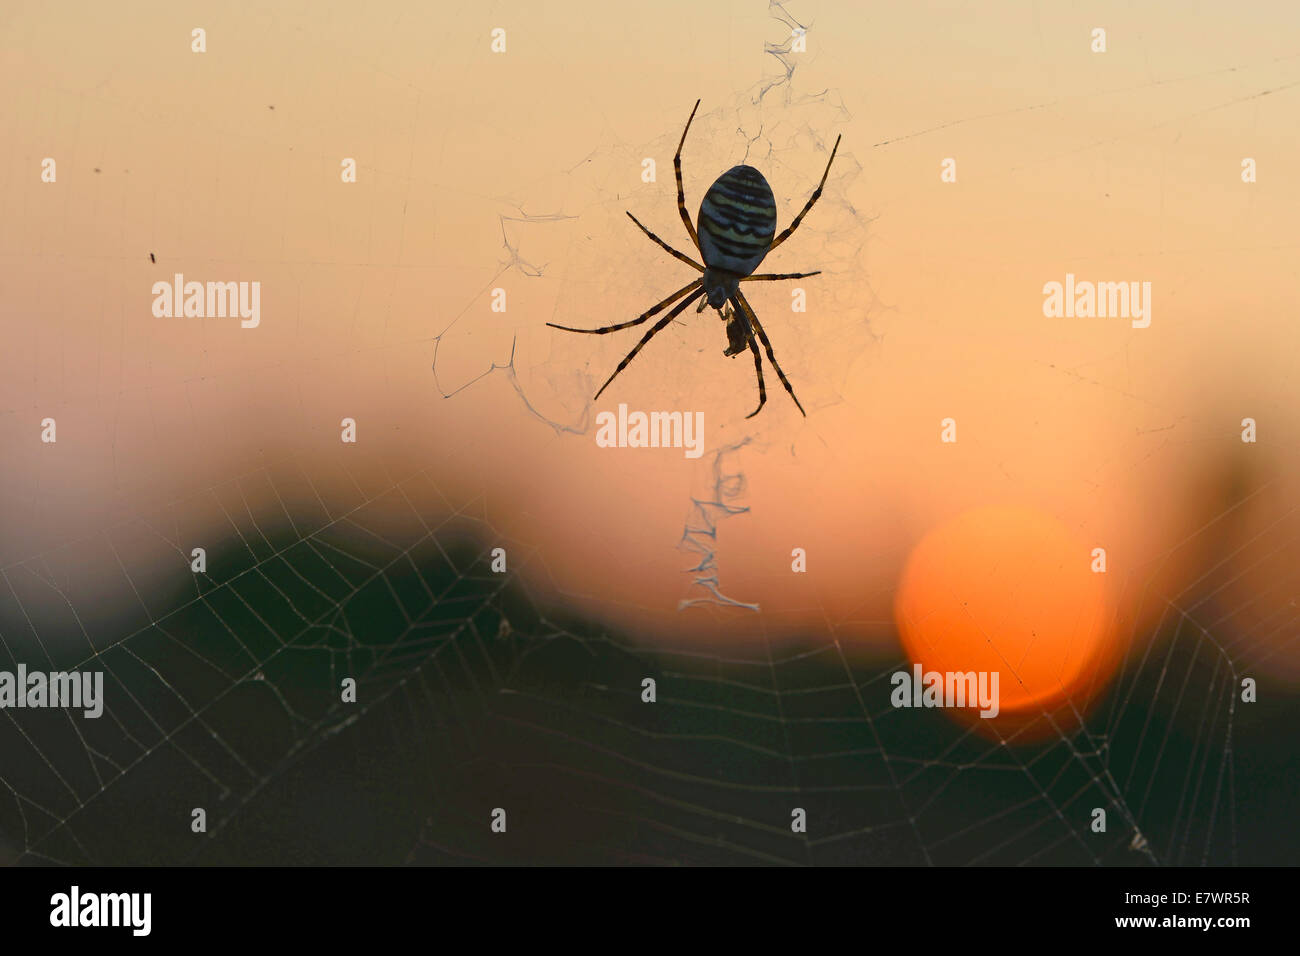 Wasp Spider (Argiope bruennichi) on a spider's web, Emsland, Lower Saxony, Germany Stock Photo